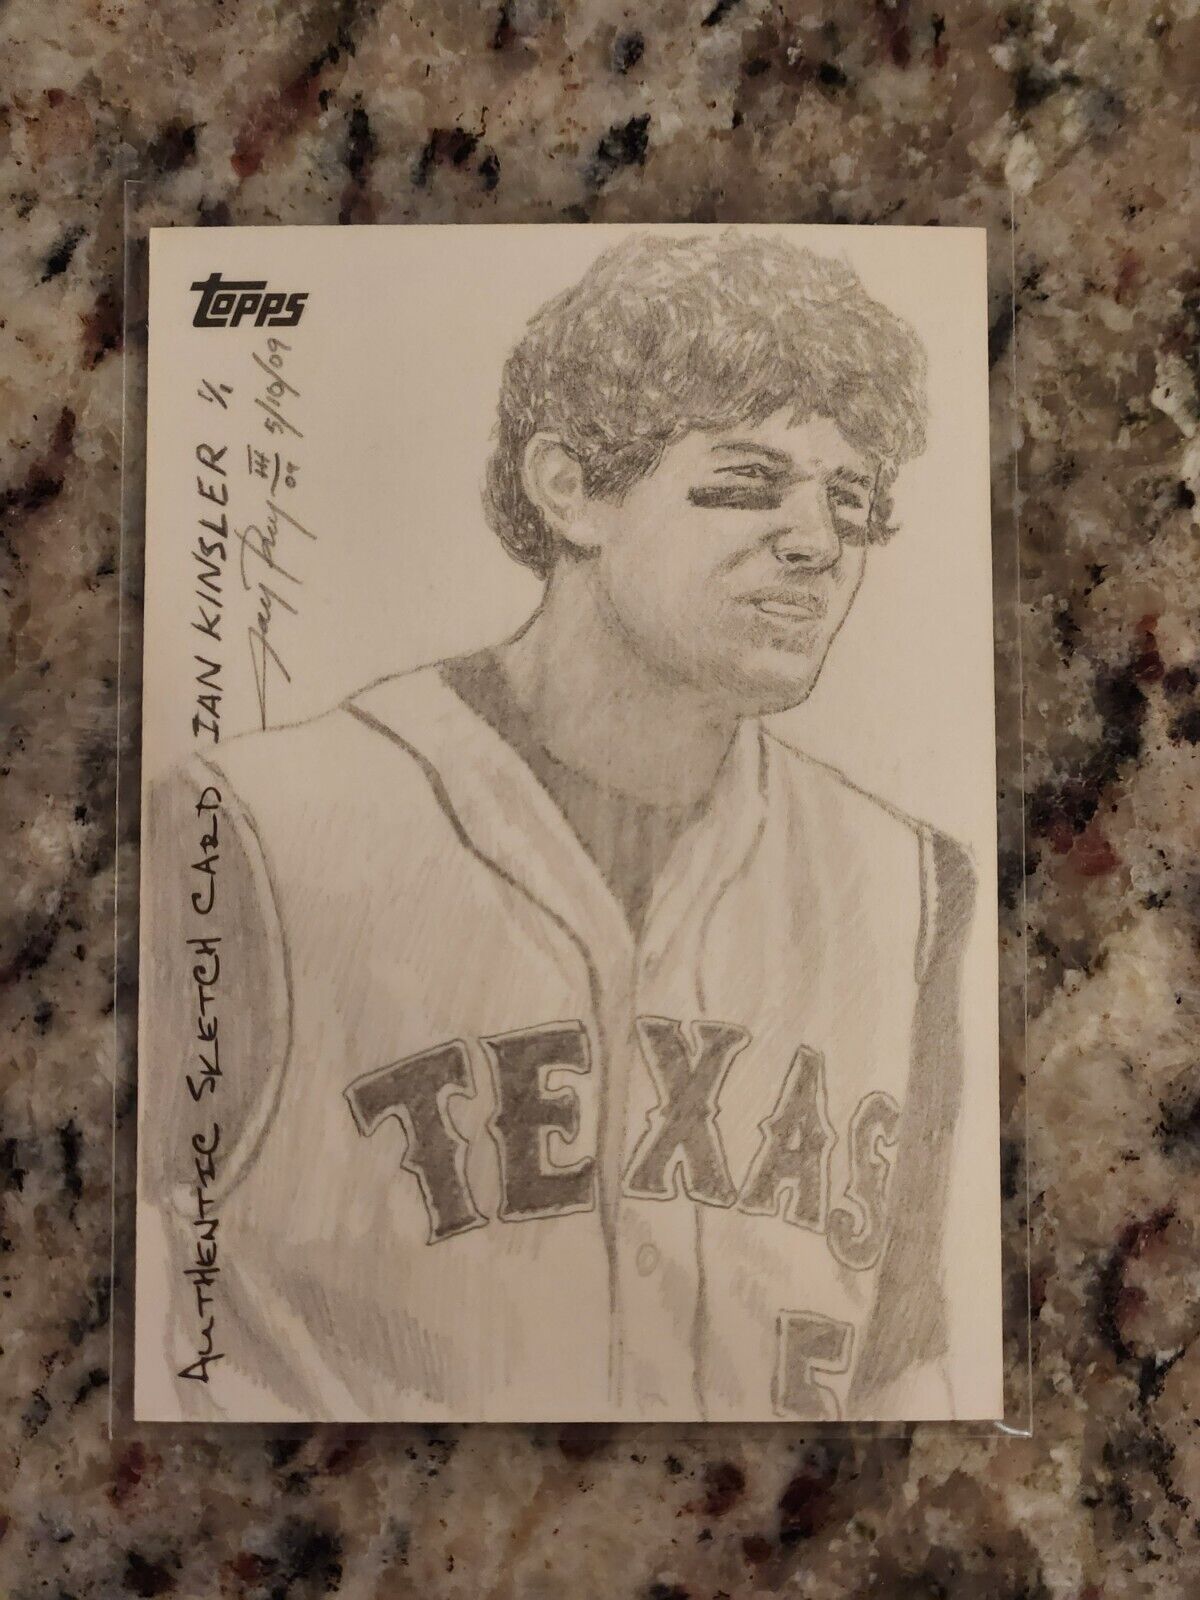 Ian Kinsler - 2009 Topps - Sketch Card - Texas Rangers - 1/1